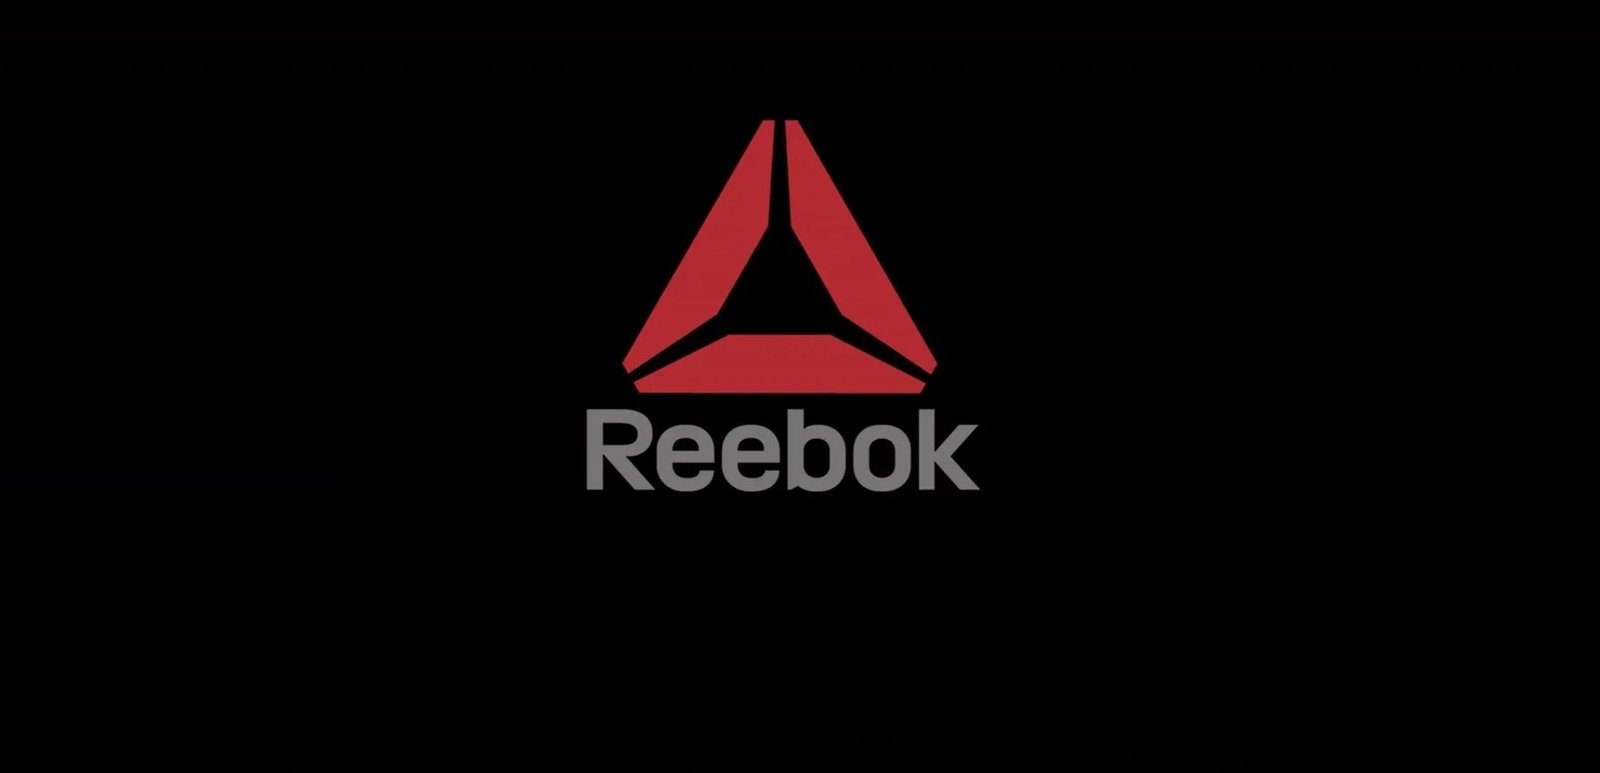 Reebok Marketing Strategy